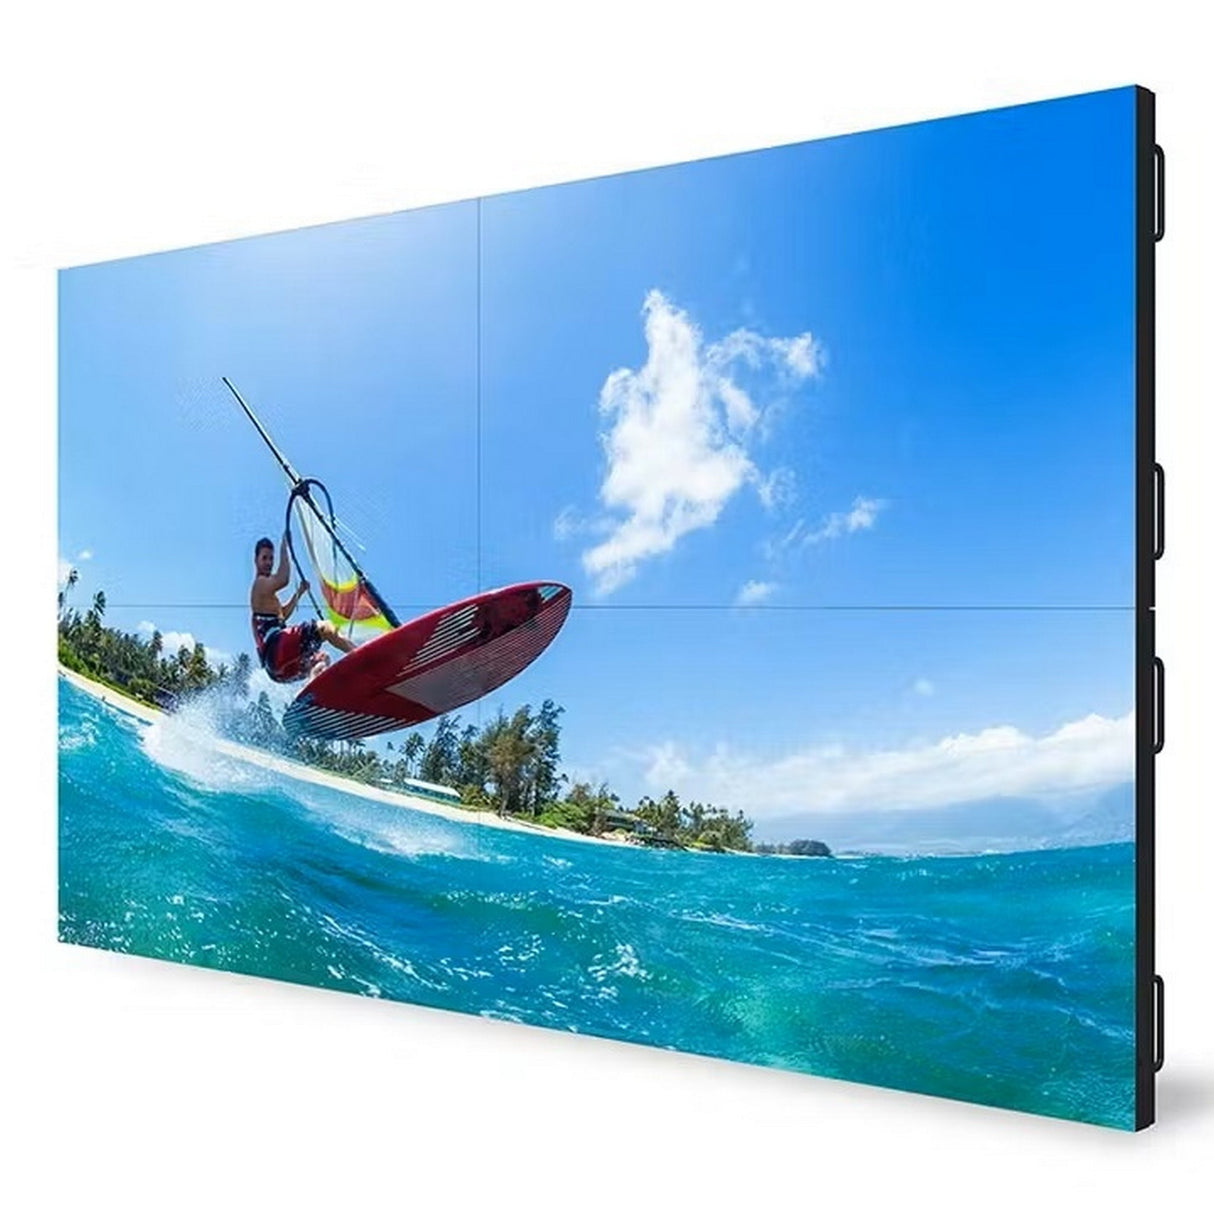 Christie FHD554-XZ 55-Inch FHD Sub-1mm Bezel LCD Video Wall Panel